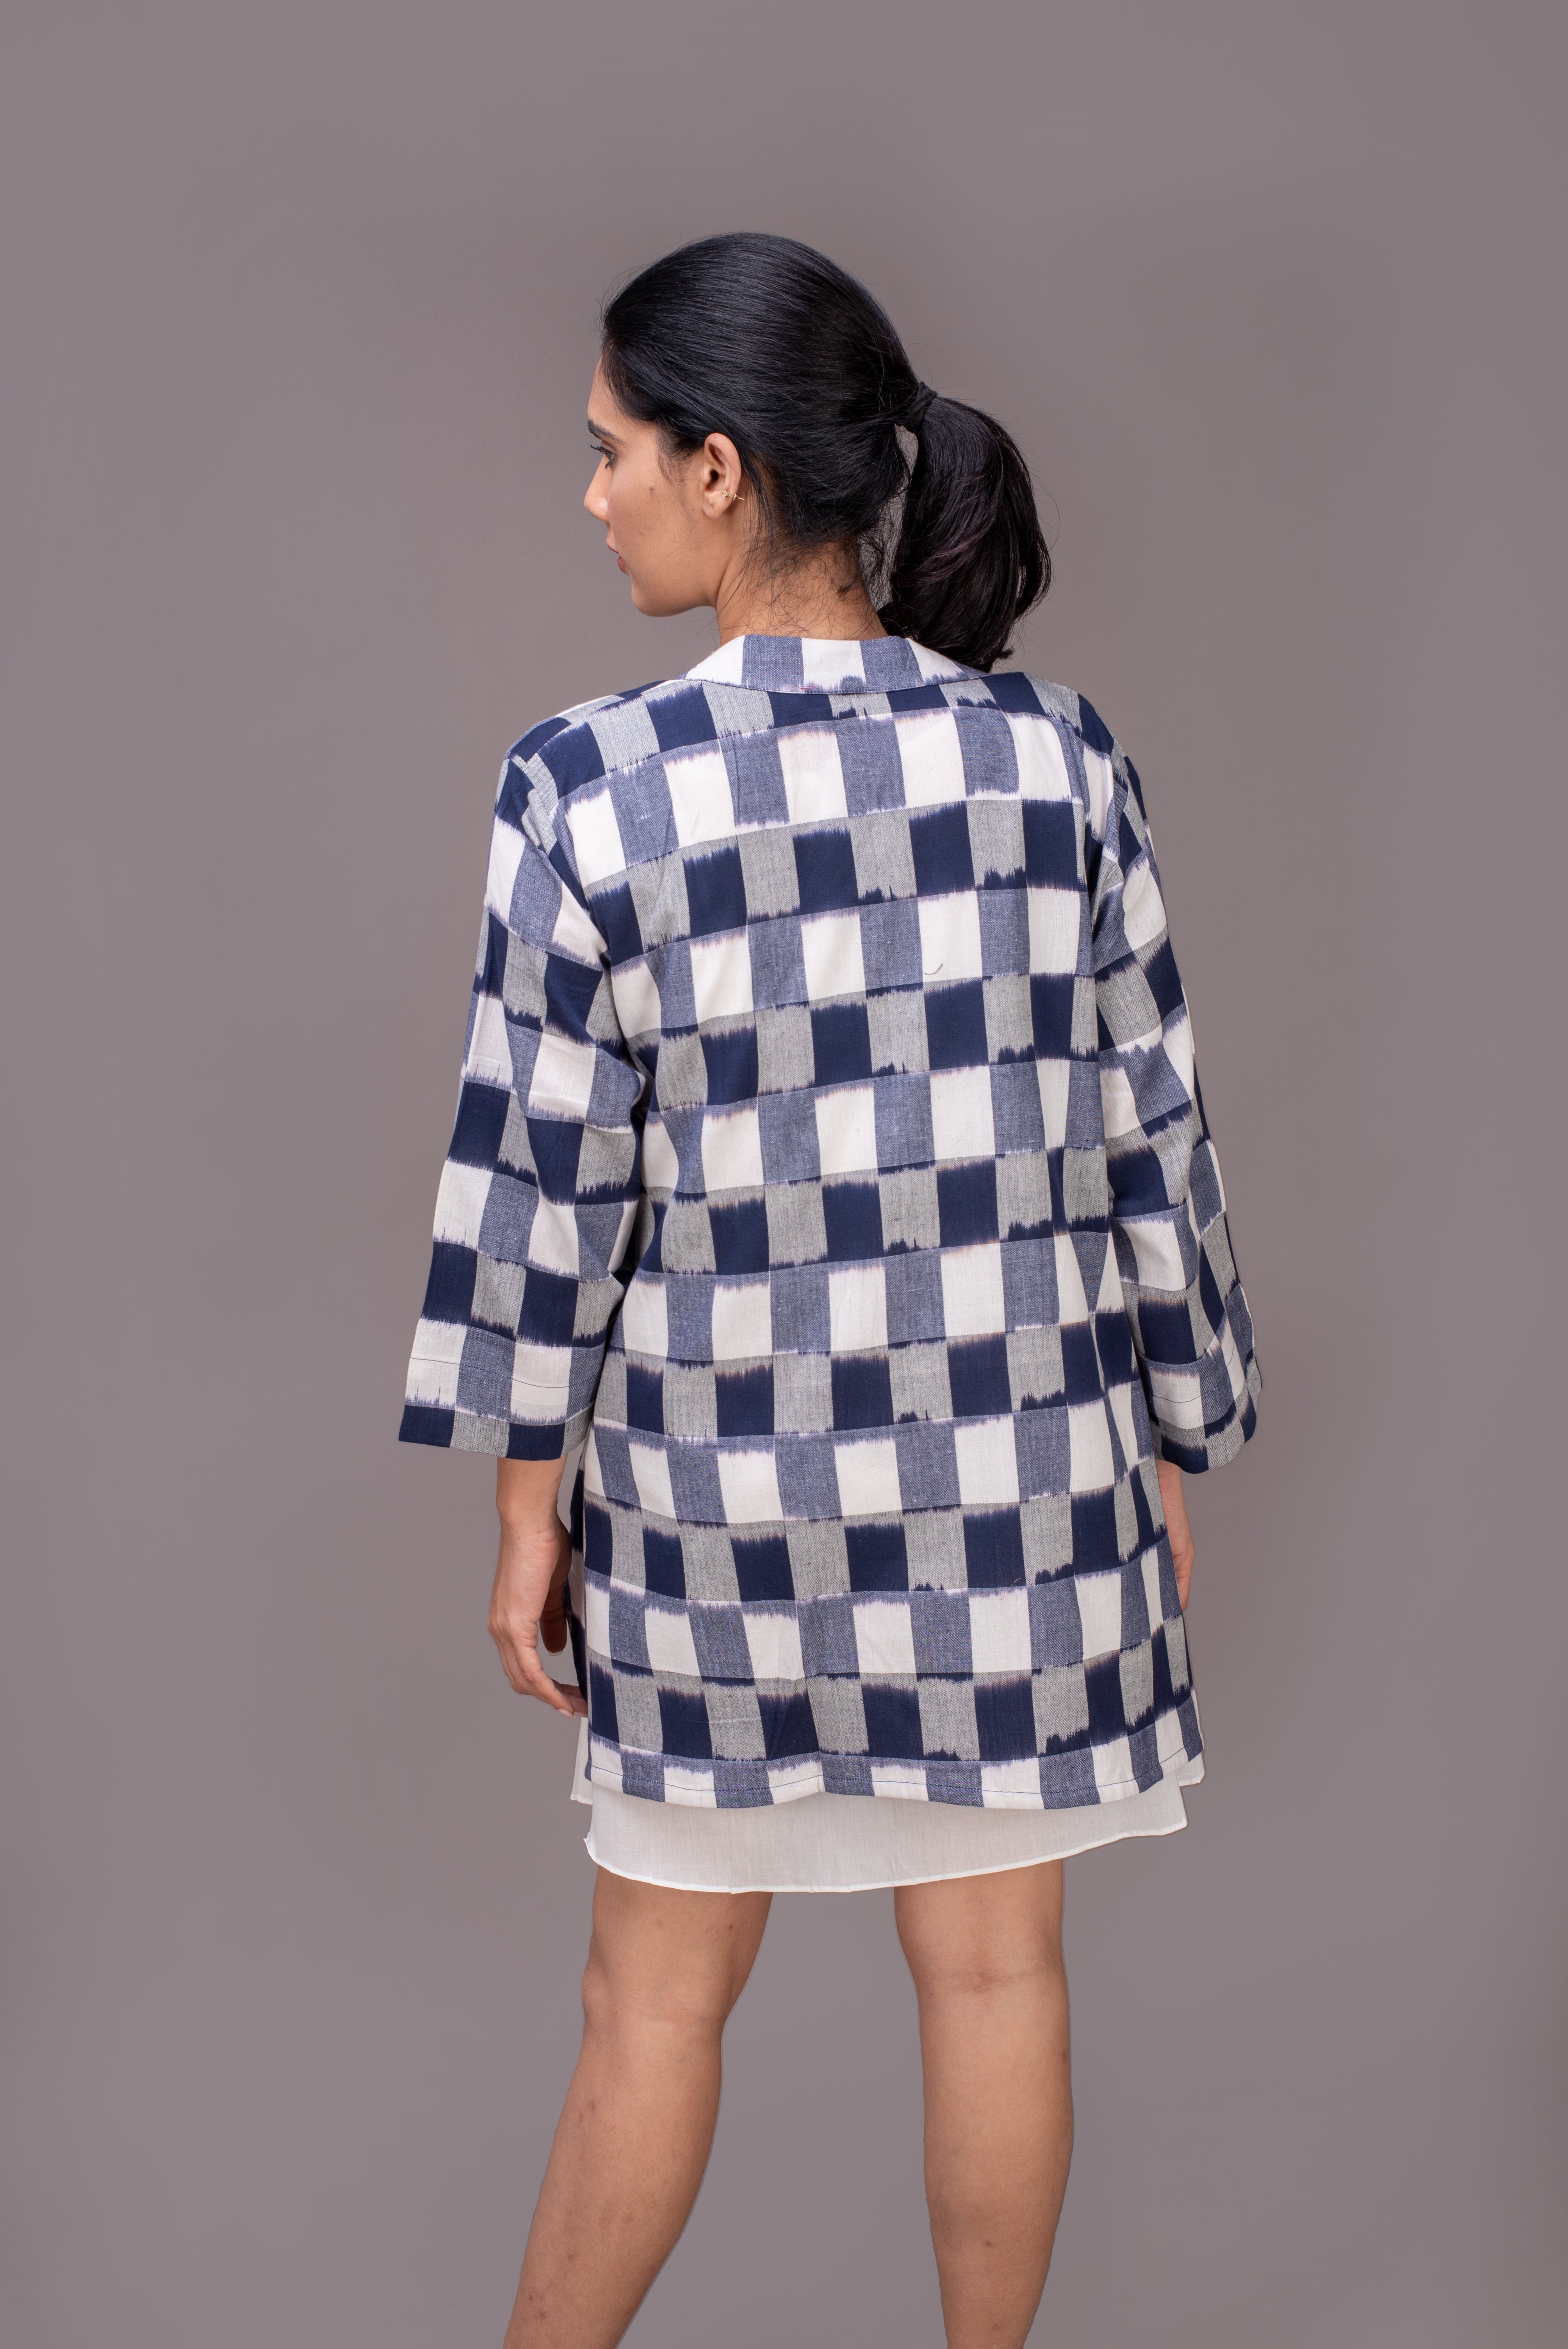 410-317 Whitelotus "Hobo" Women's coat/Kimono